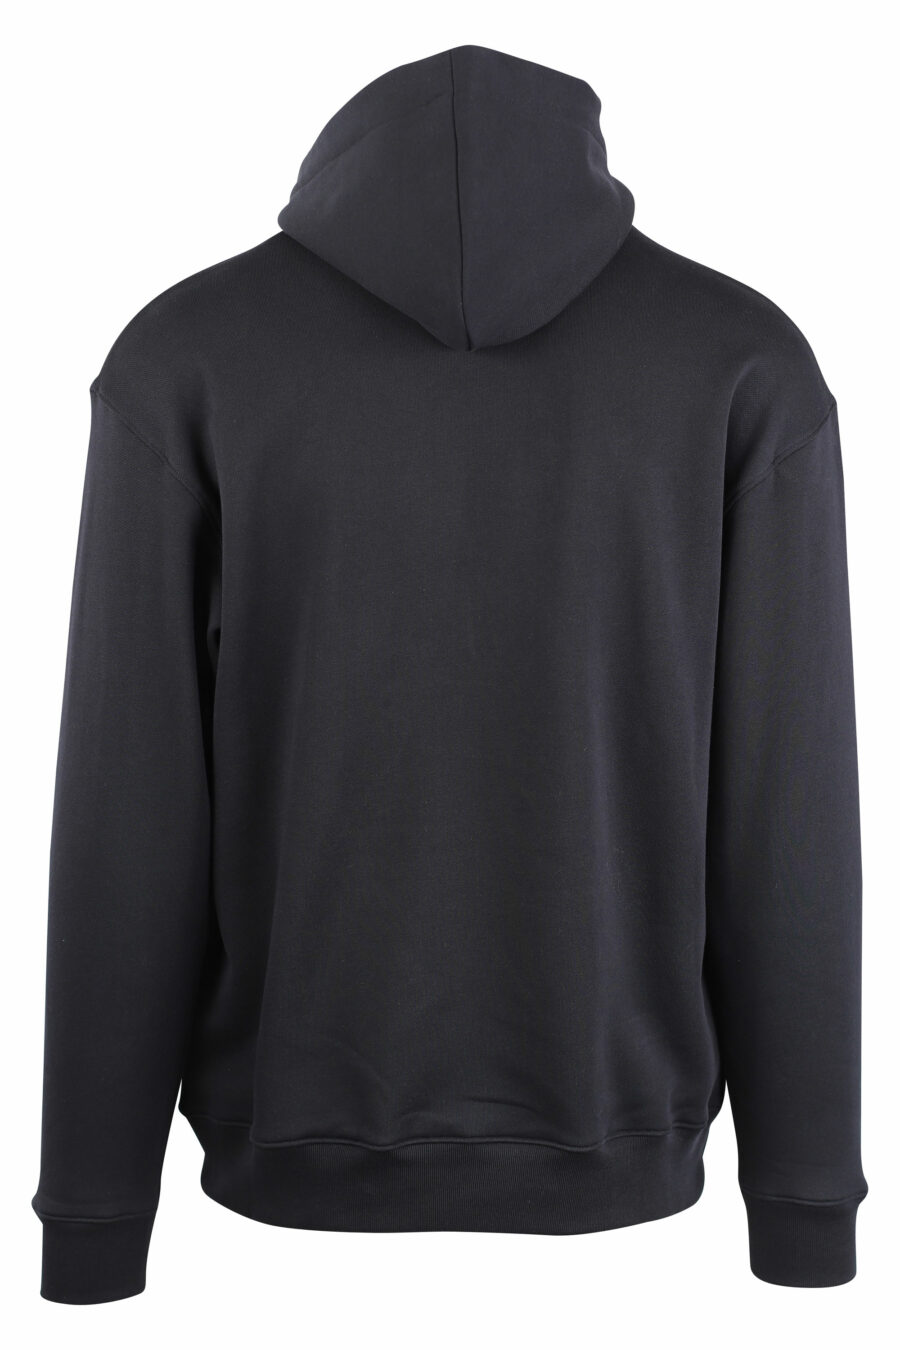 Black hooded sweatshirt with white stripe logo - IMG 1477